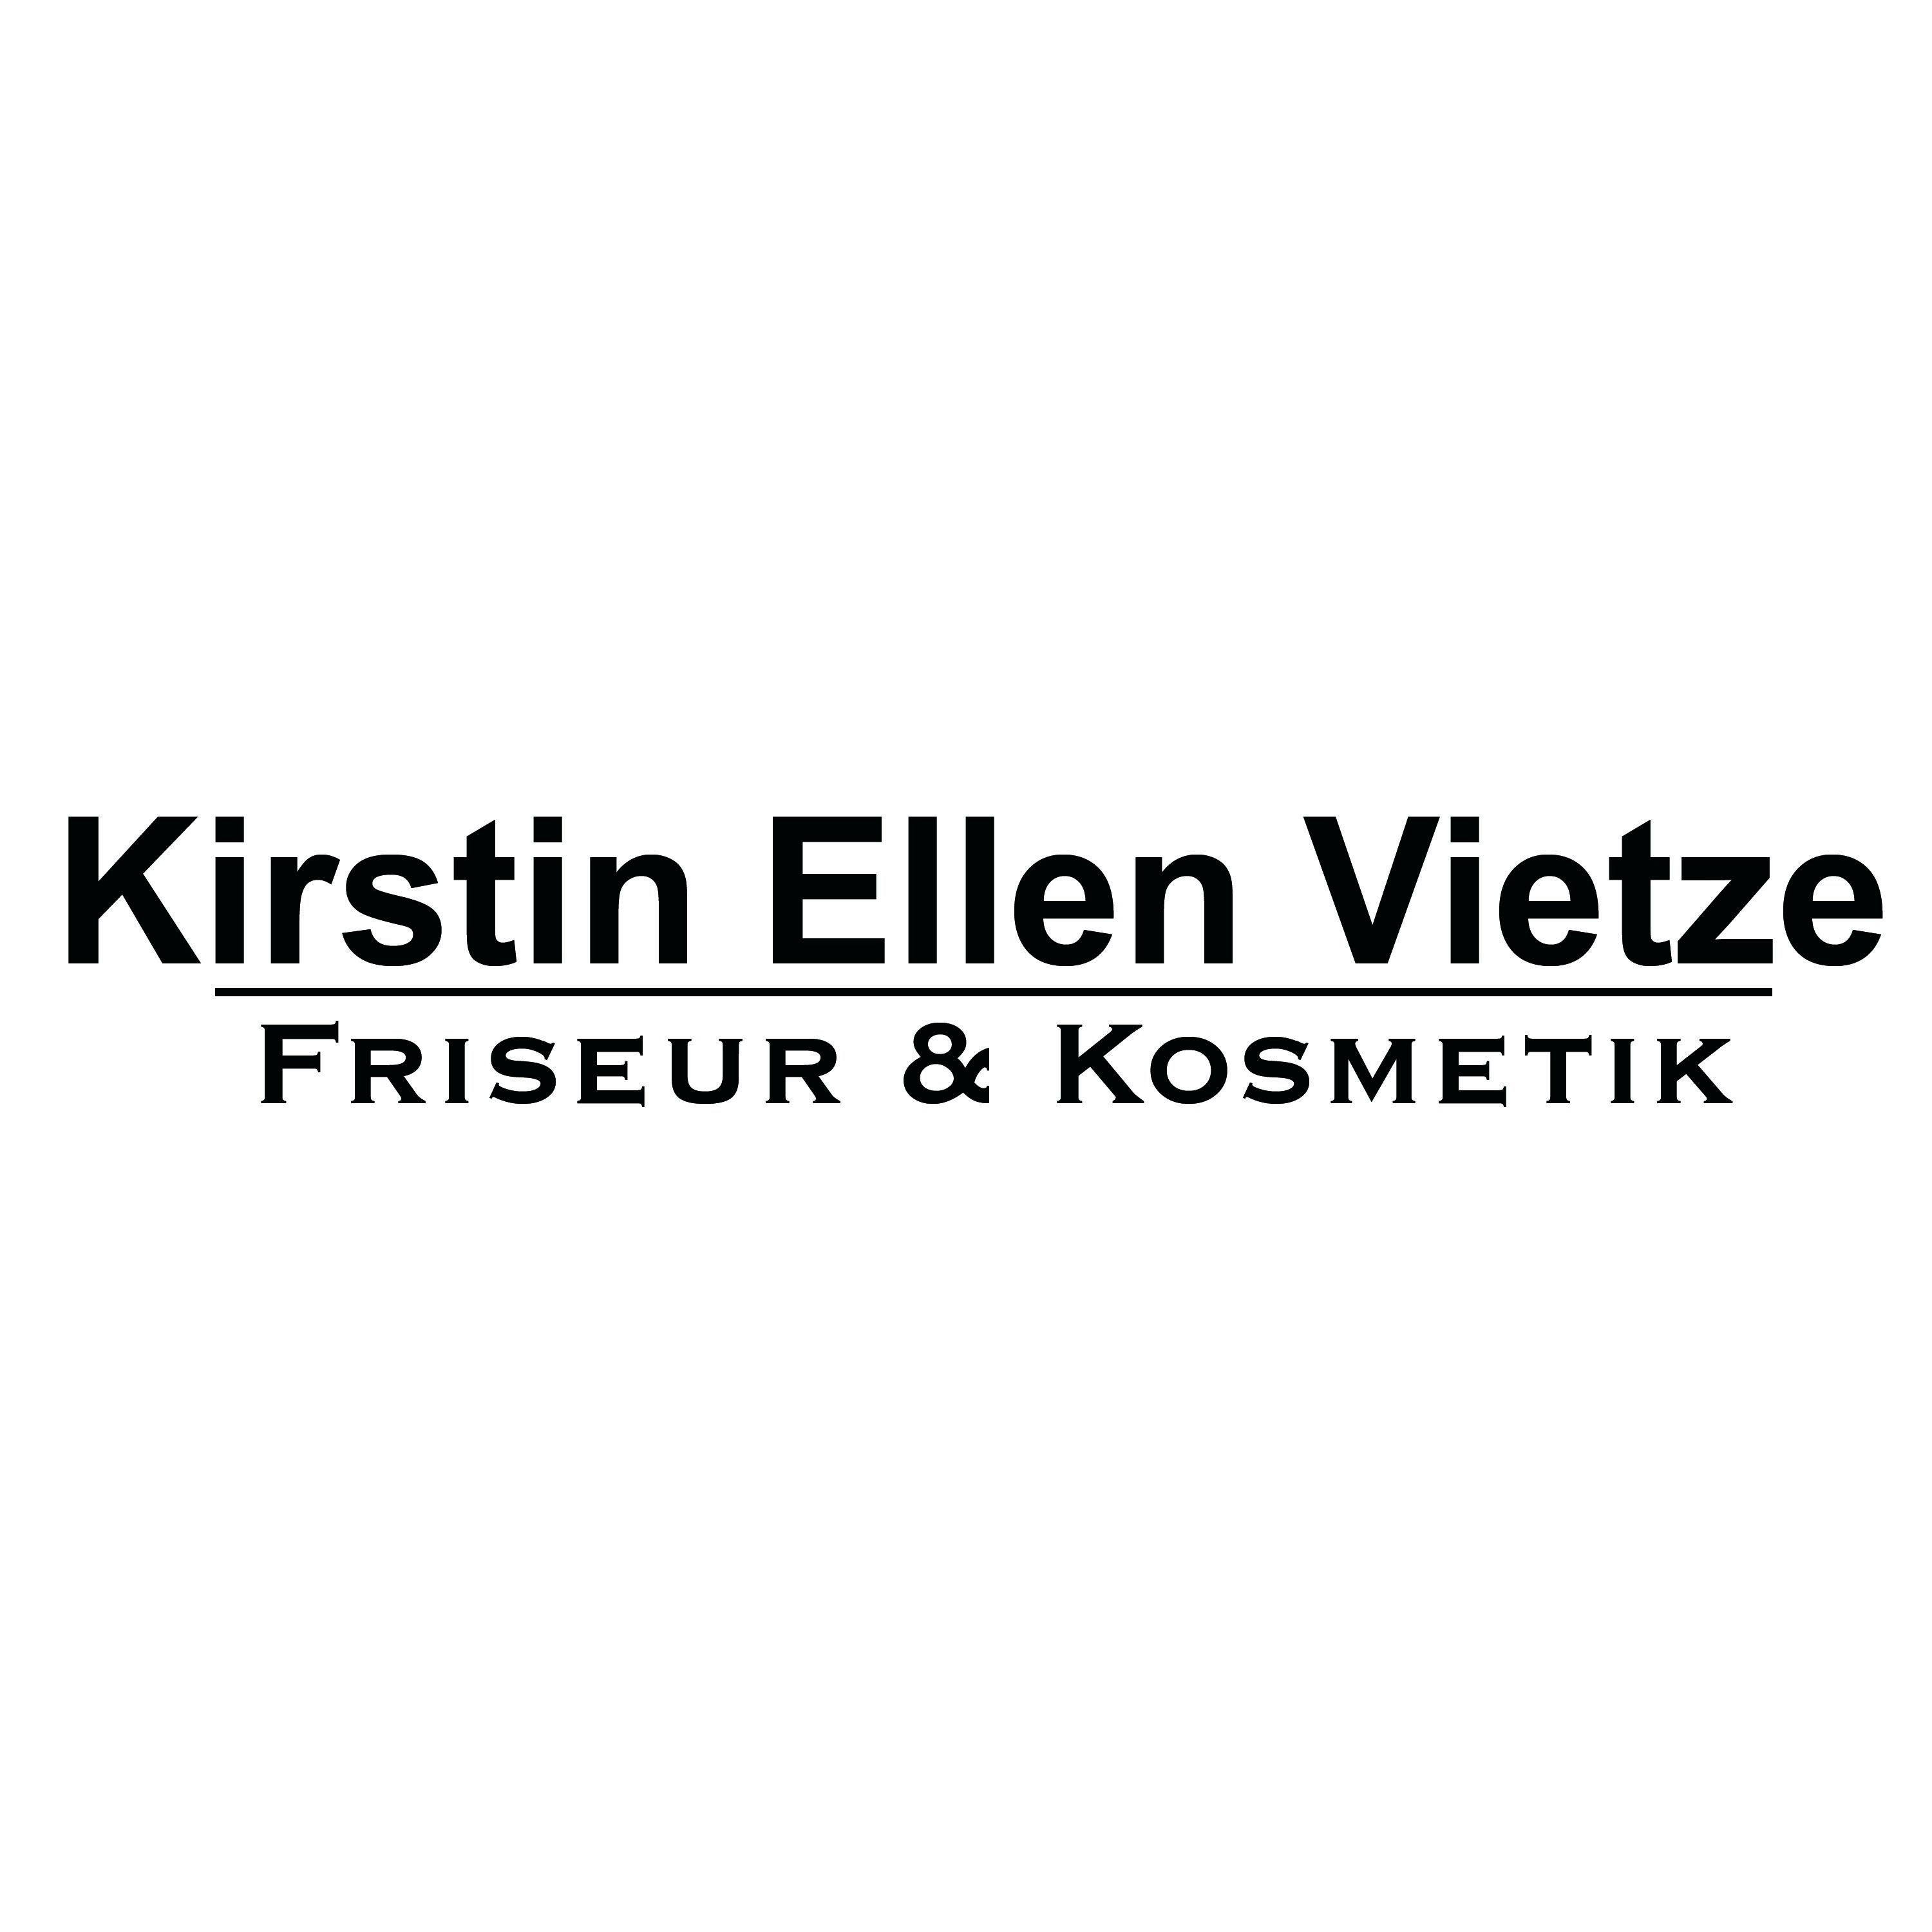 Kirstin Ellen Vietze Friseur & Kosmetik GmbH in Berlin - Logo